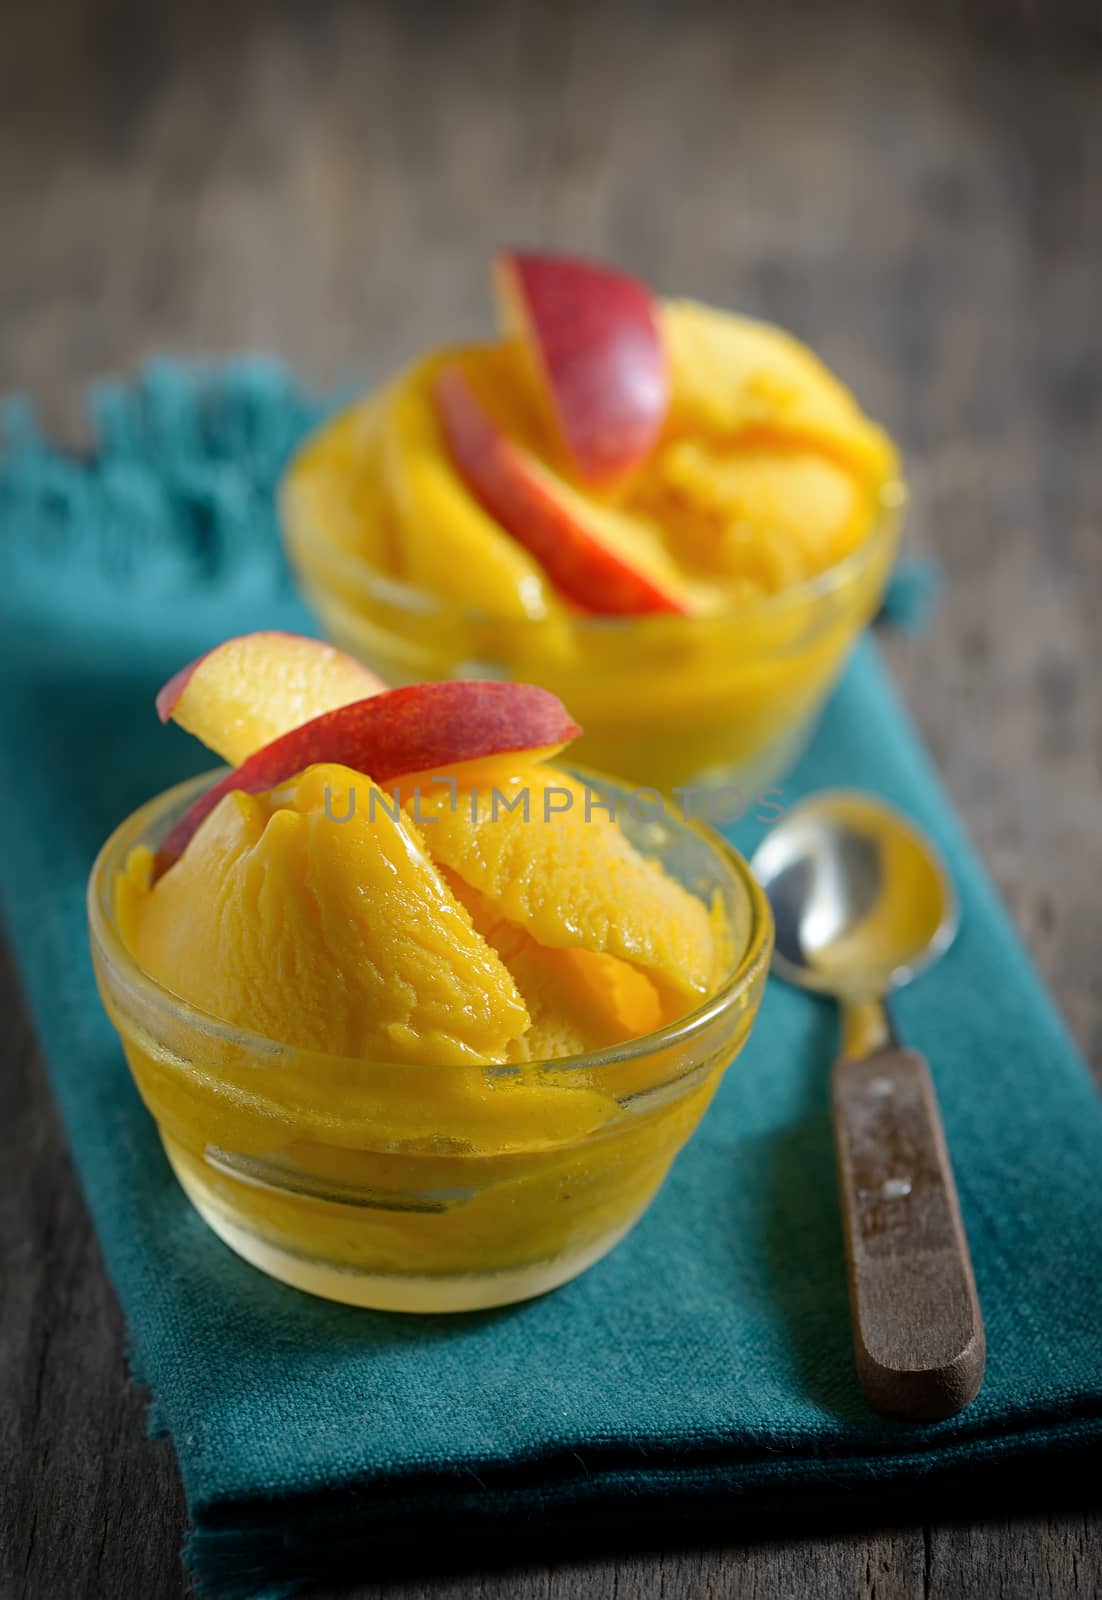 Home made mango ice sorbet  by mady70